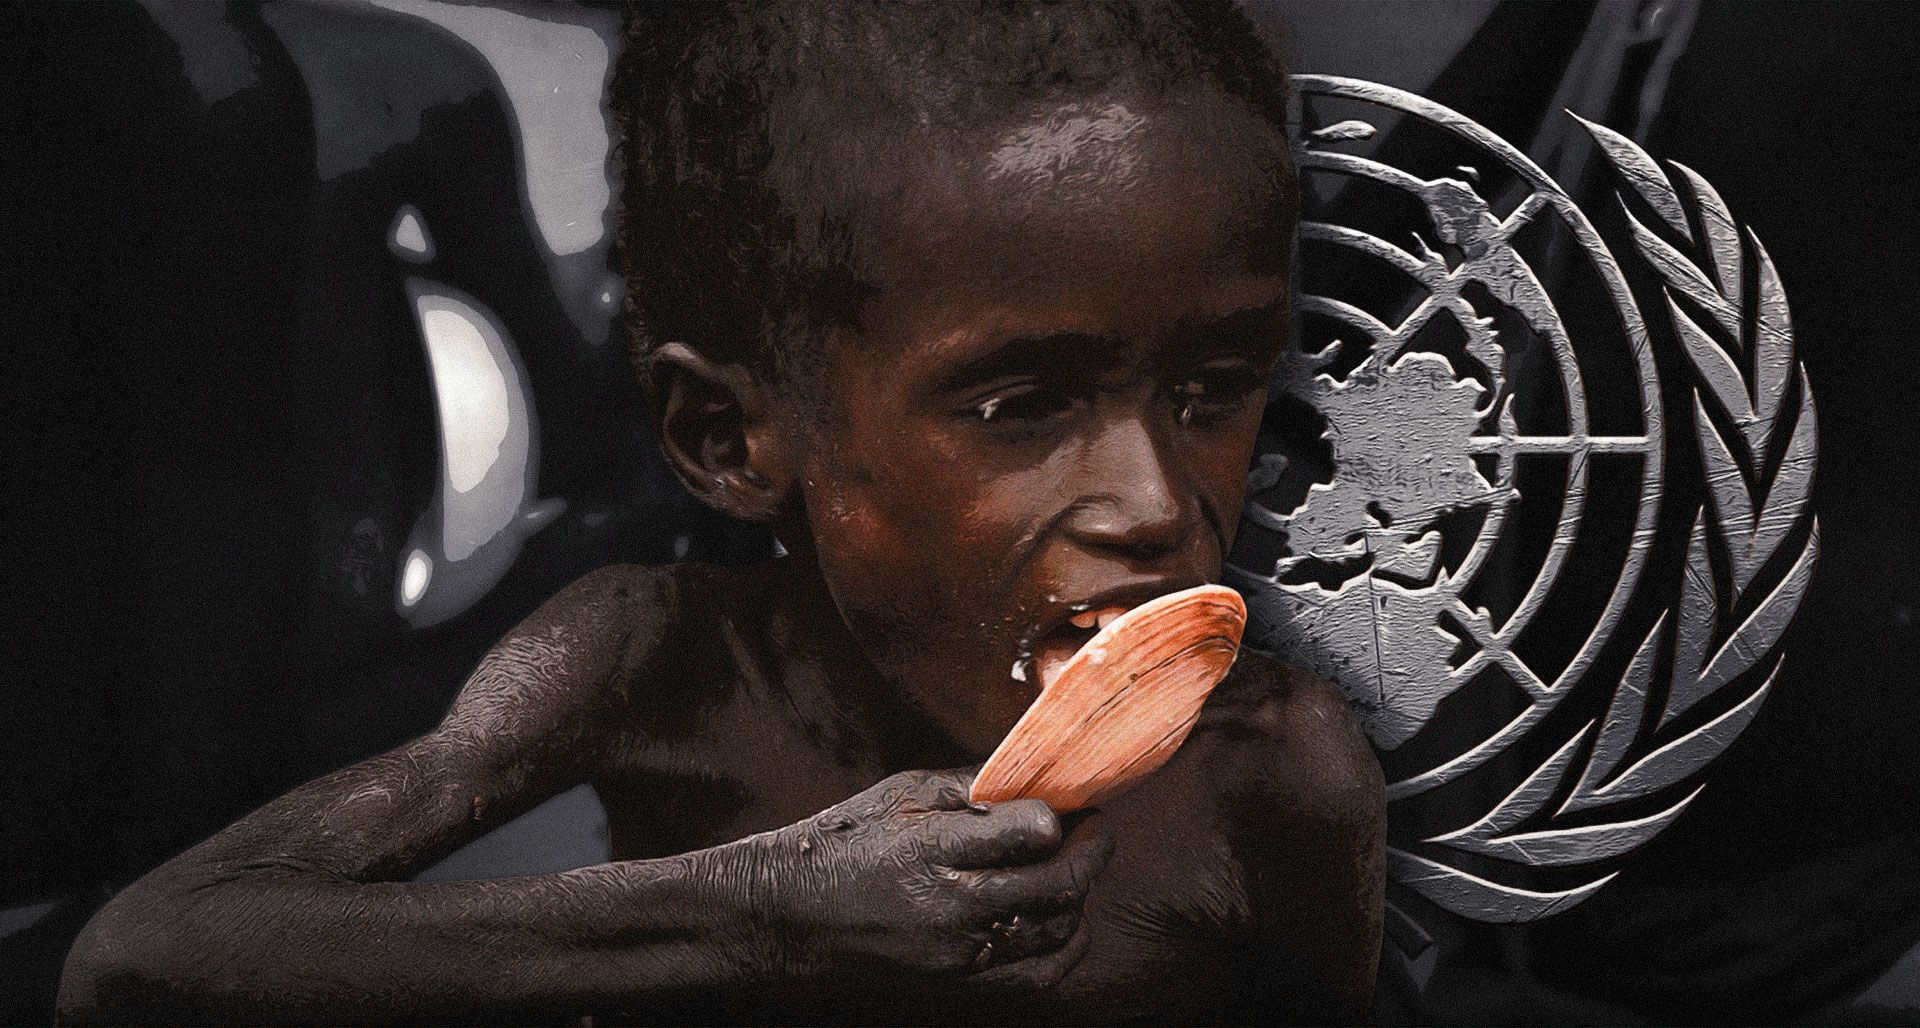 Sudan starvation crisis